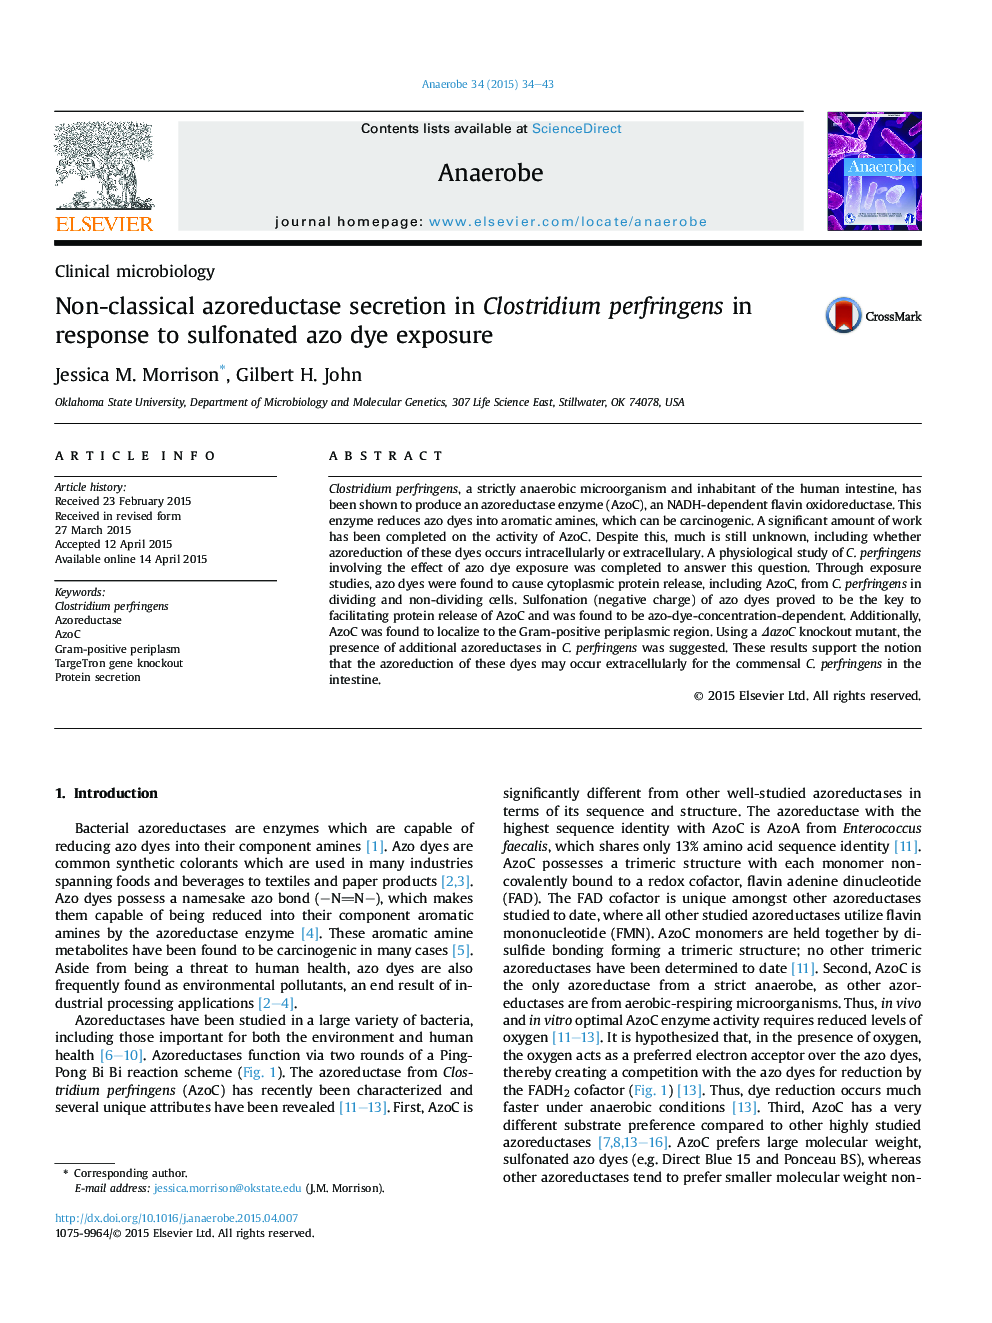 Non-classical azoreductase secretion in Clostridium perfringens in response to sulfonated azo dye exposure